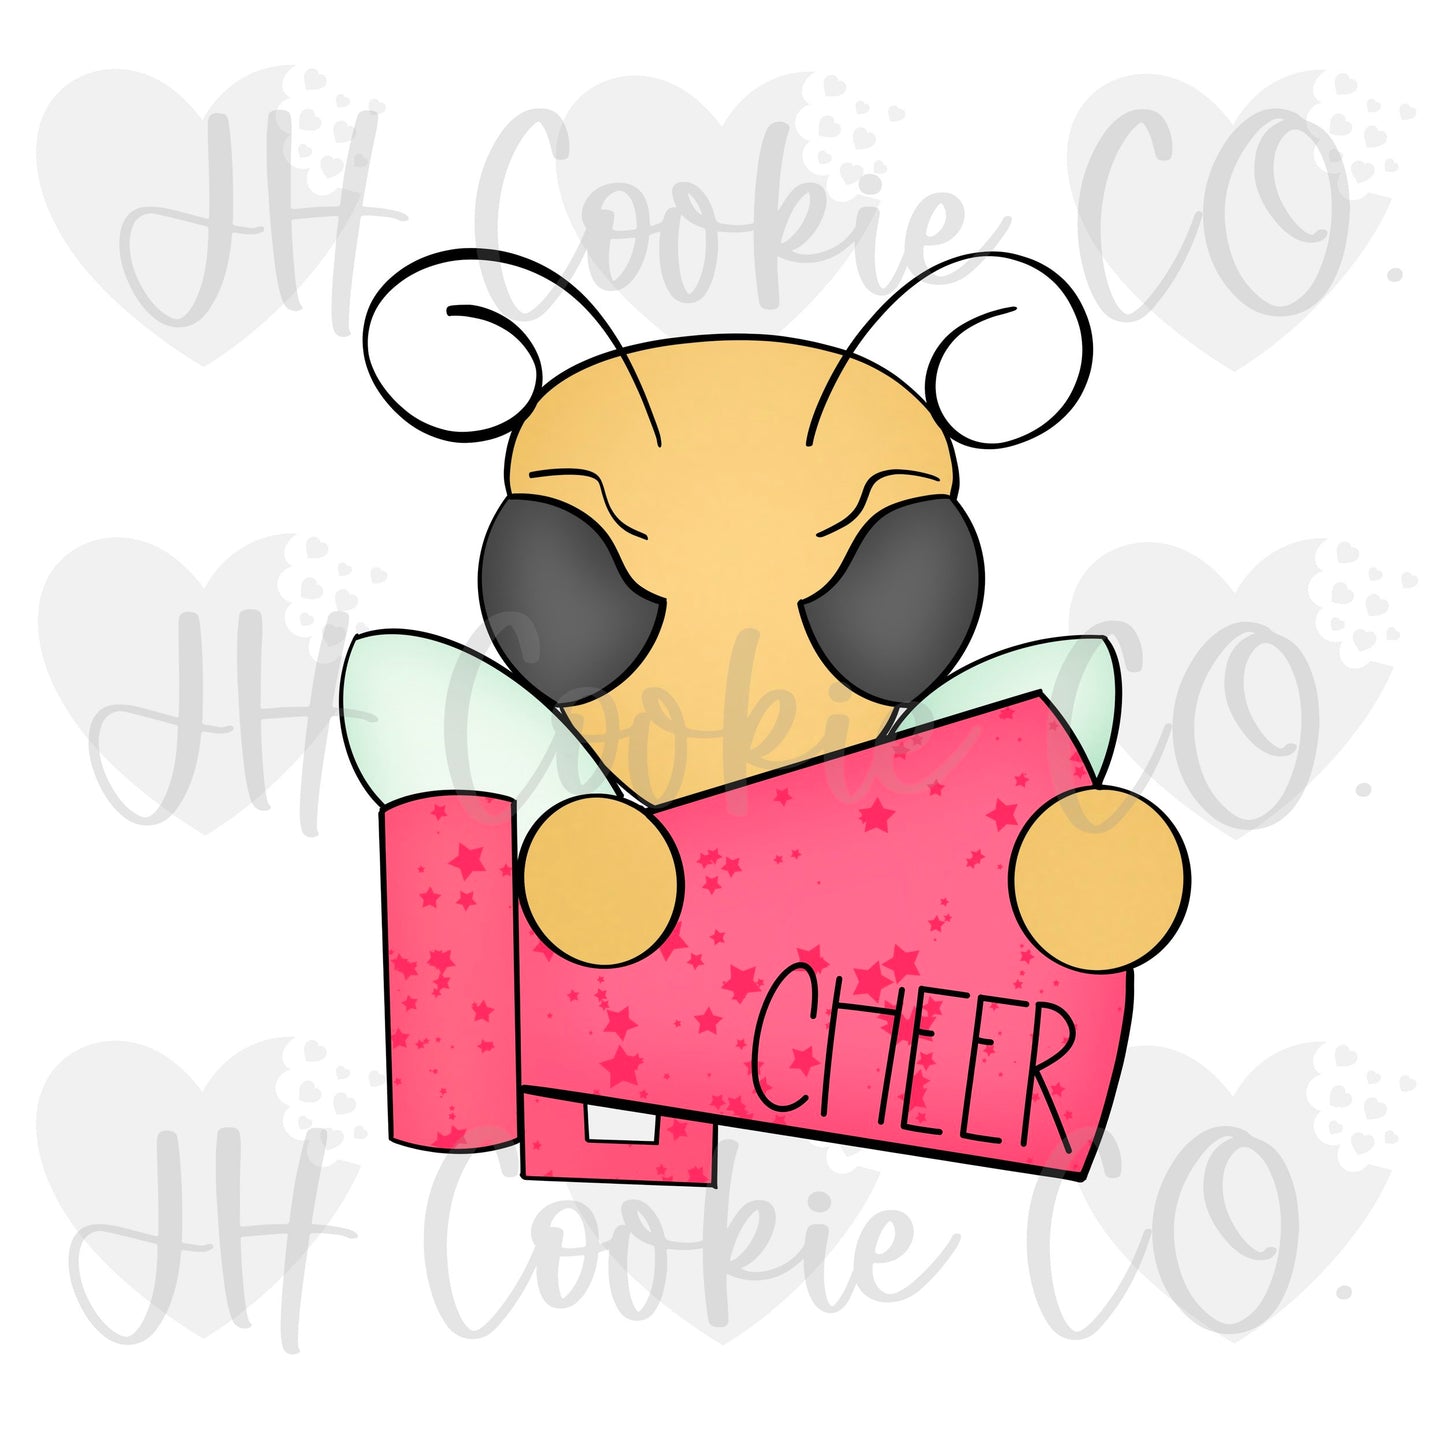 Hornet Cheer Plaque (2022) - Cookie Cutter